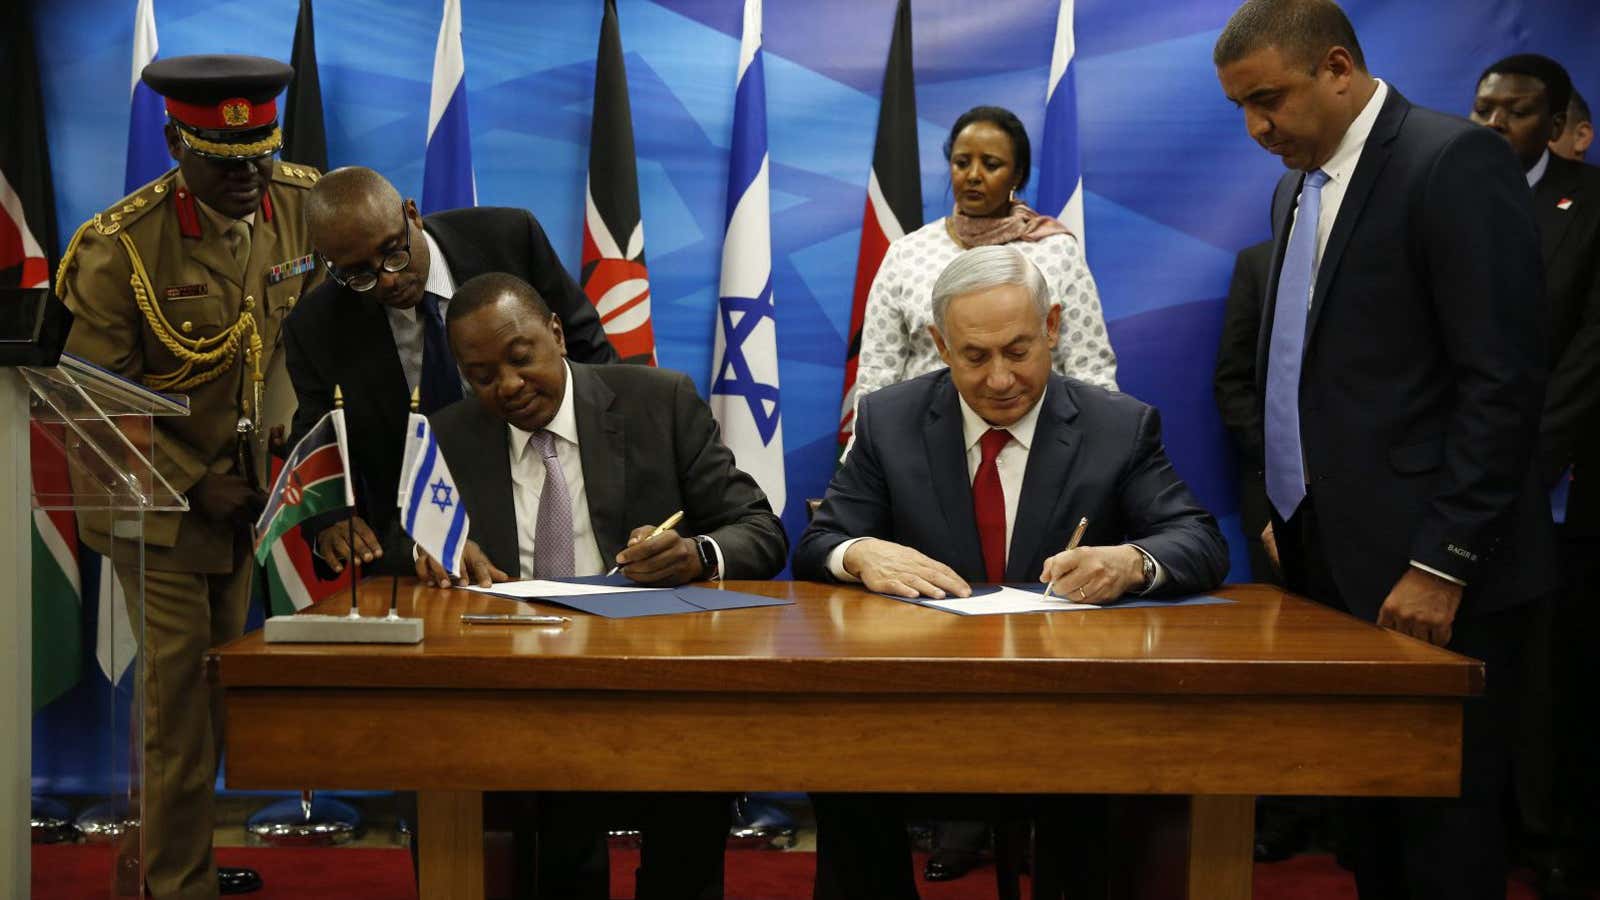 Kenyan president, Uhuru Kenyatta, and Israeli prime minister, Benjamin Netanyahu, sign agreements after they delivered joint statements in Jerusalem on Feb. 23, 2016.